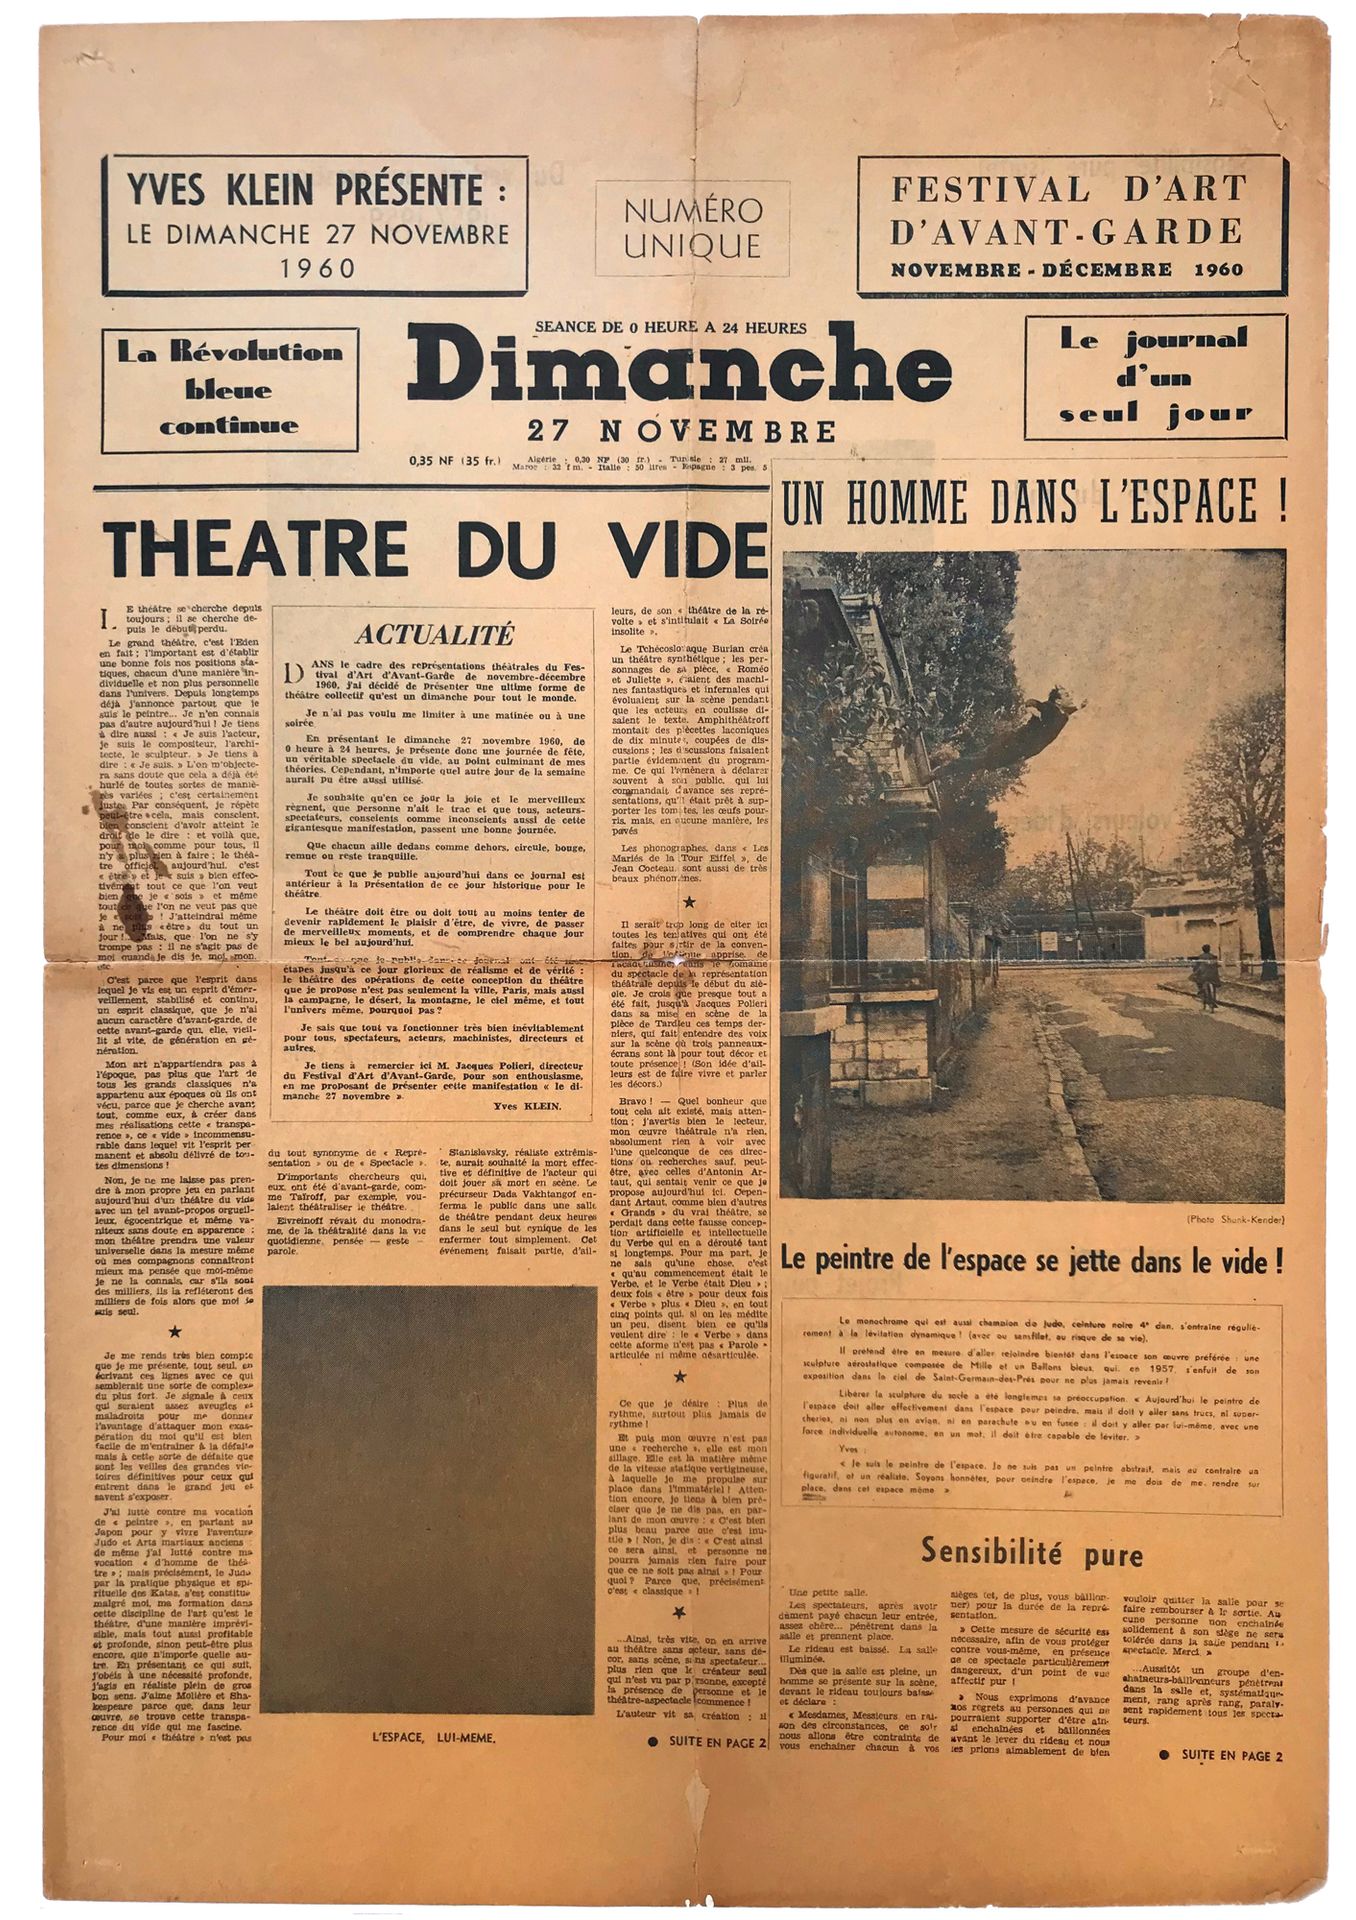 [YVES KLEIN] Le Journal d'un jour, 1960
Original copy of this famous fake newspa&hellip;